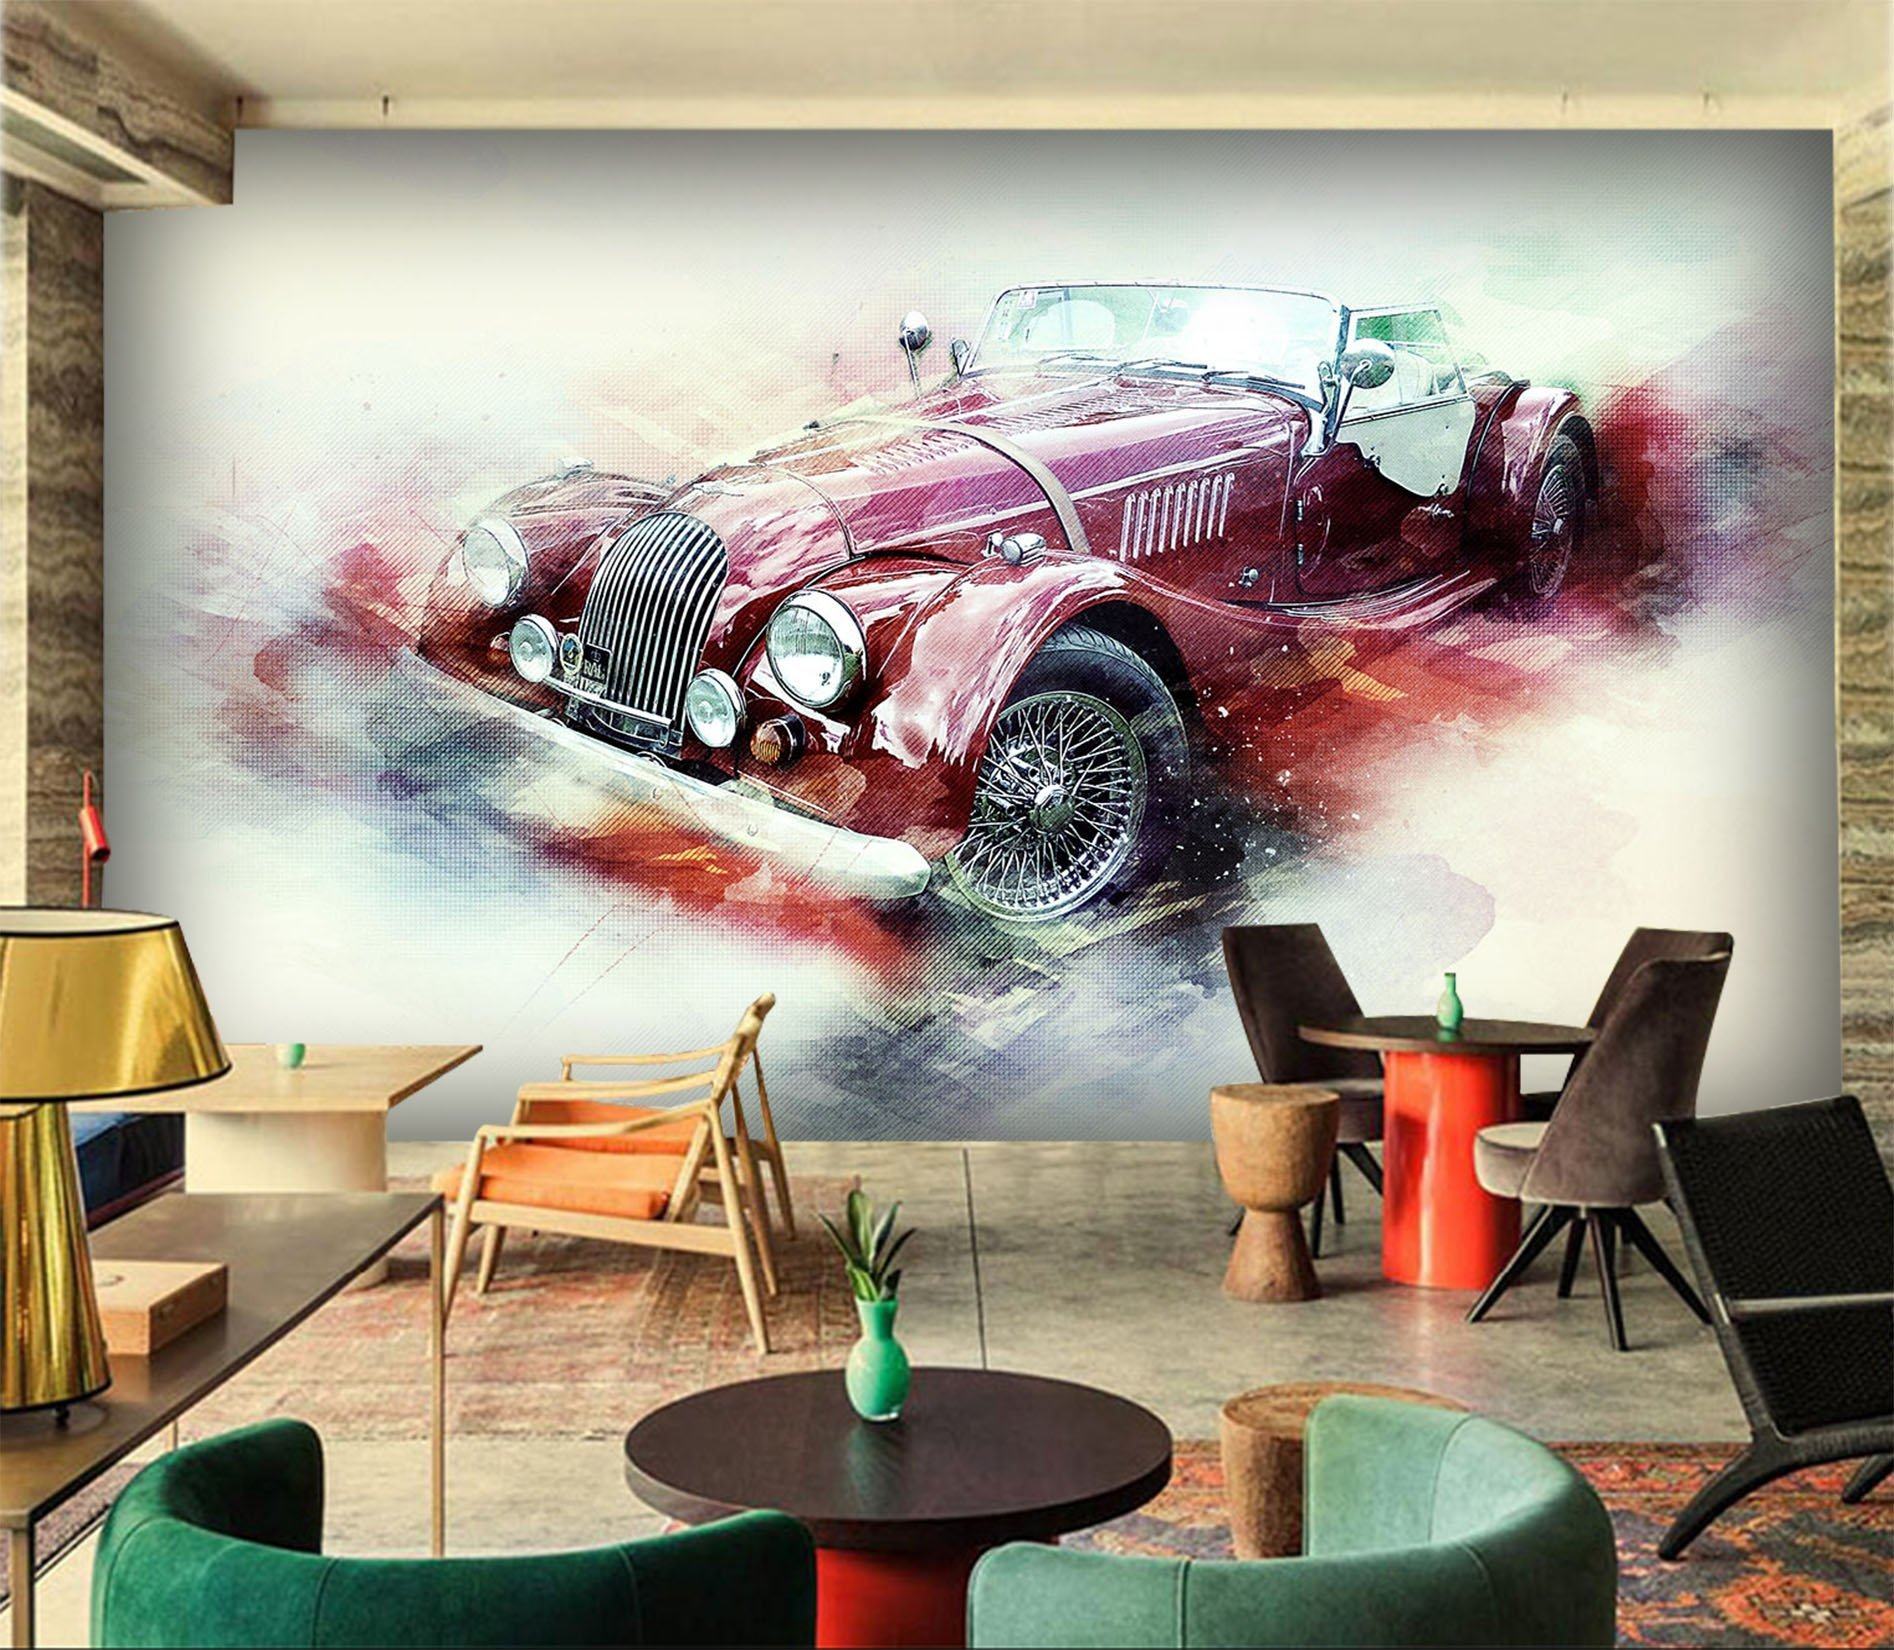 3D Austin Colour 903 Vehicle Wall Murals Wallpaper AJ Wallpaper 2 